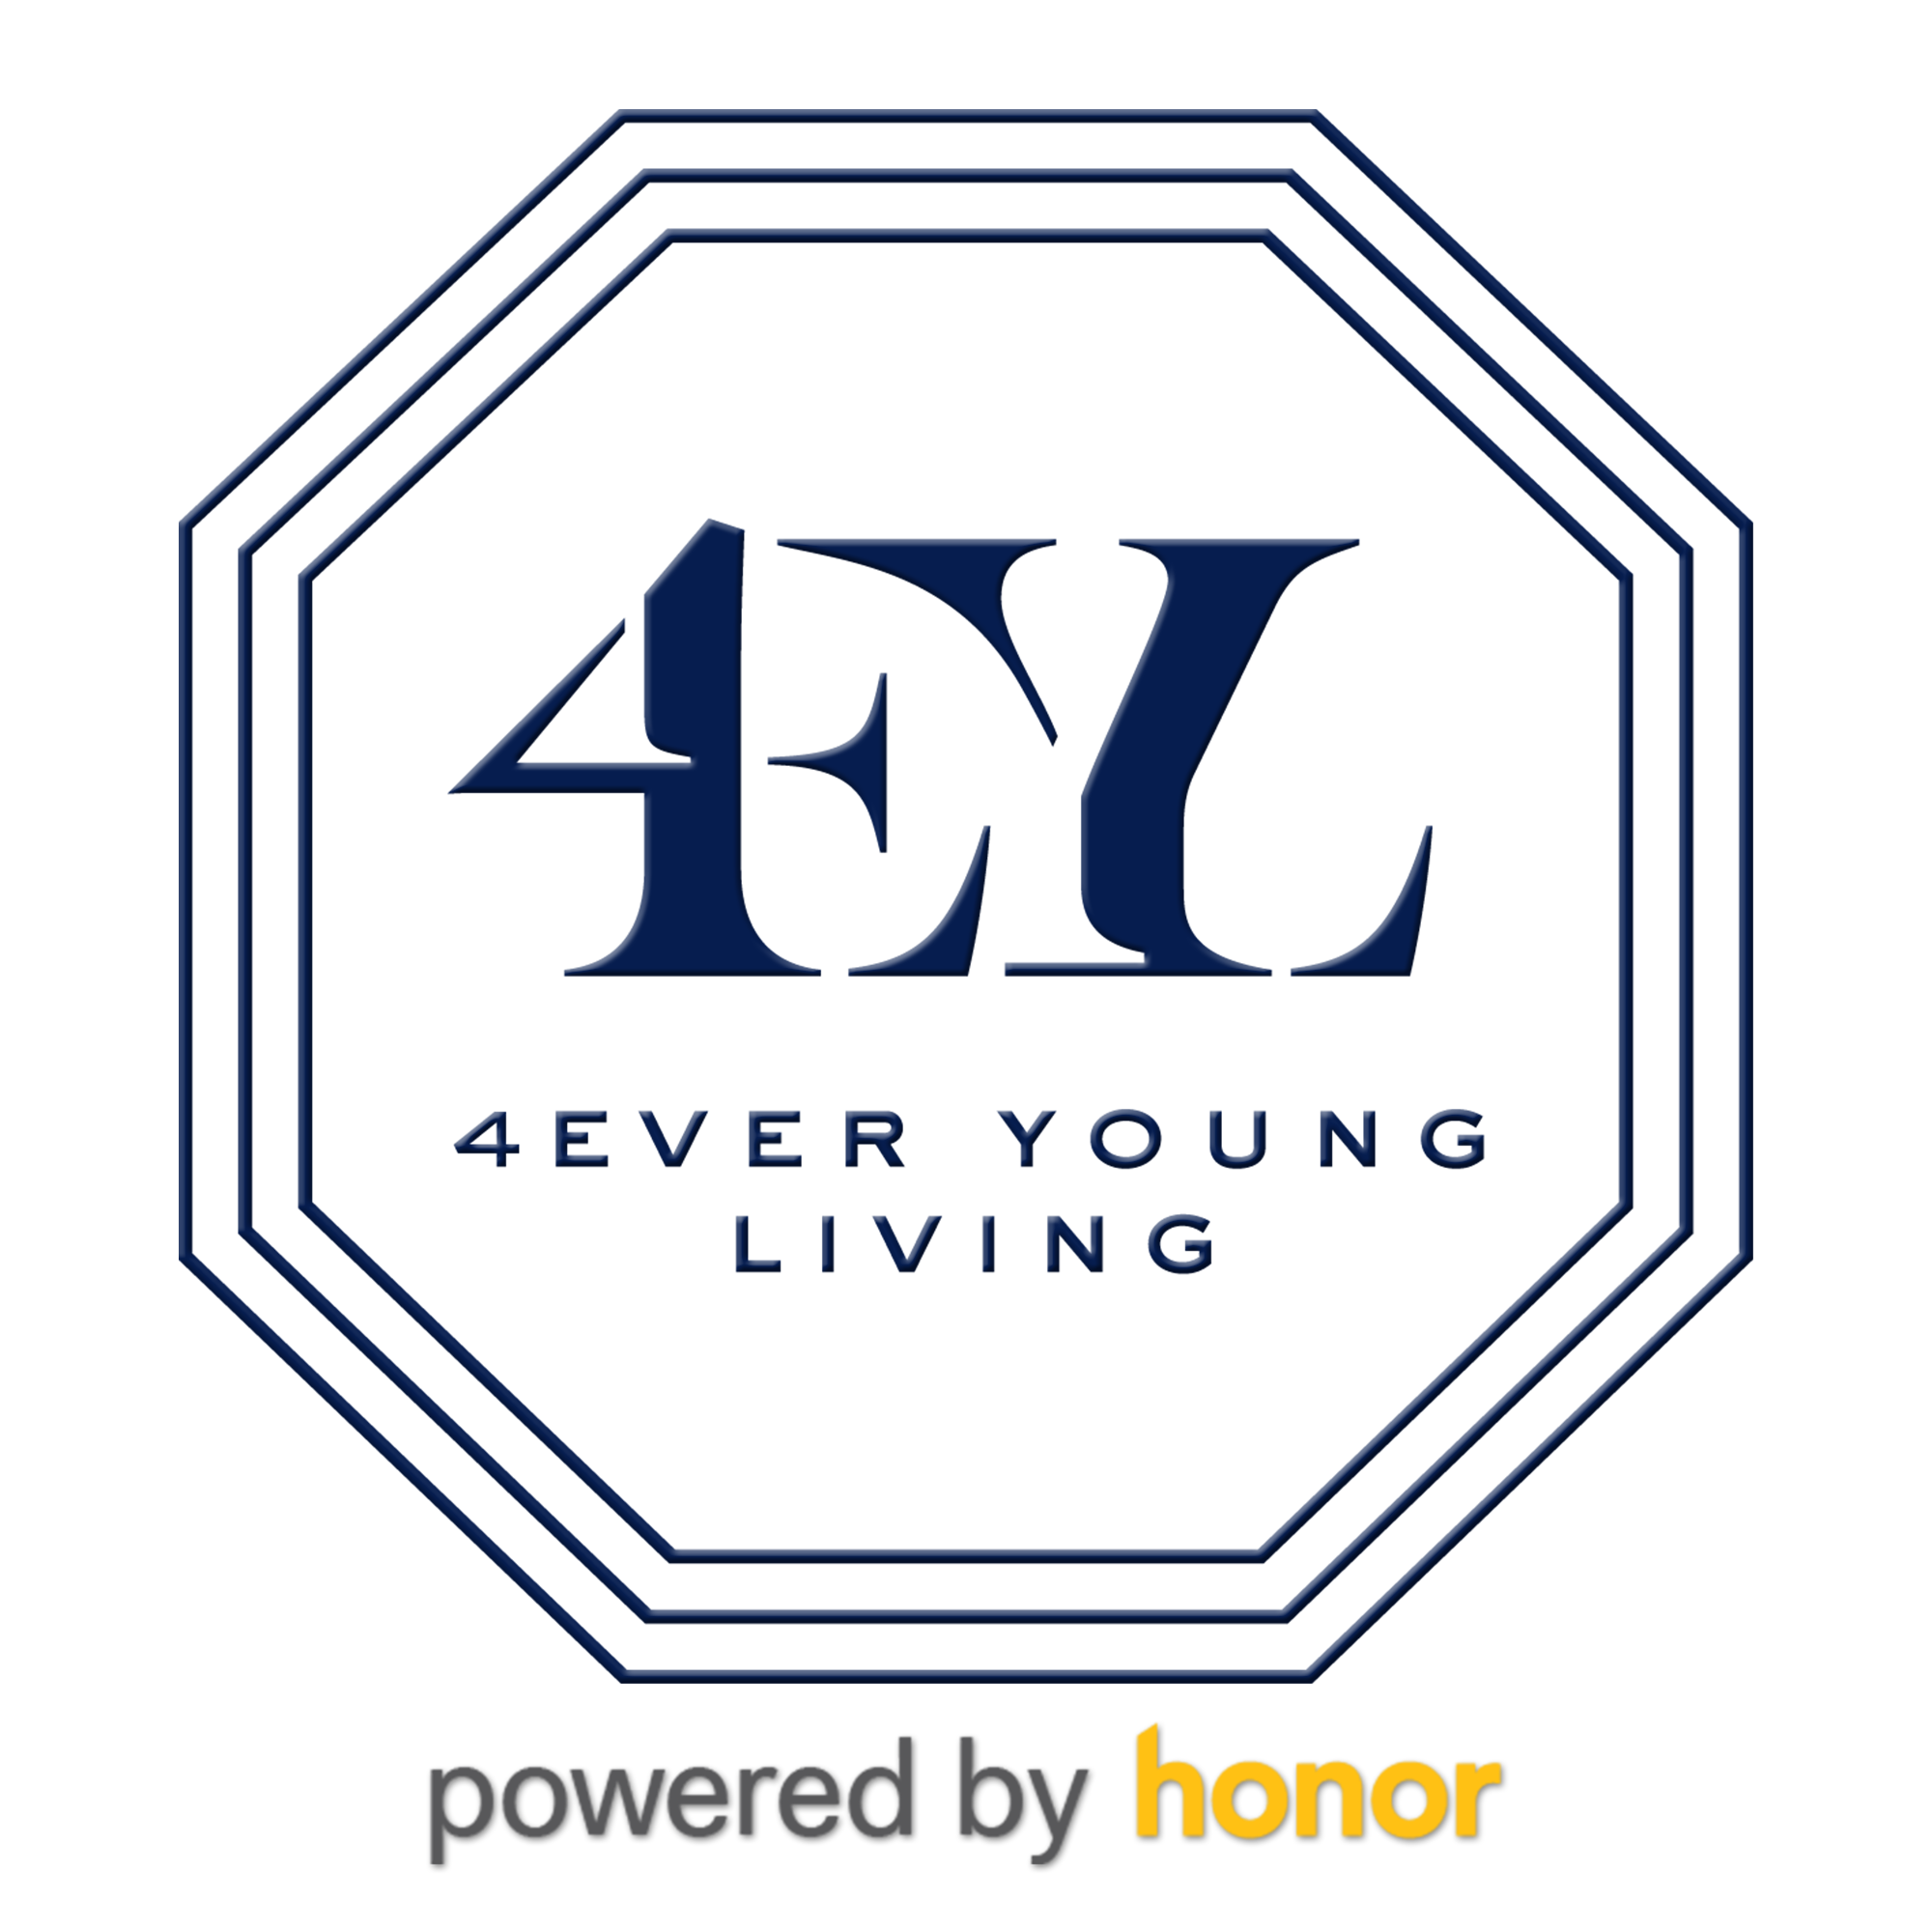 4ever young living logo